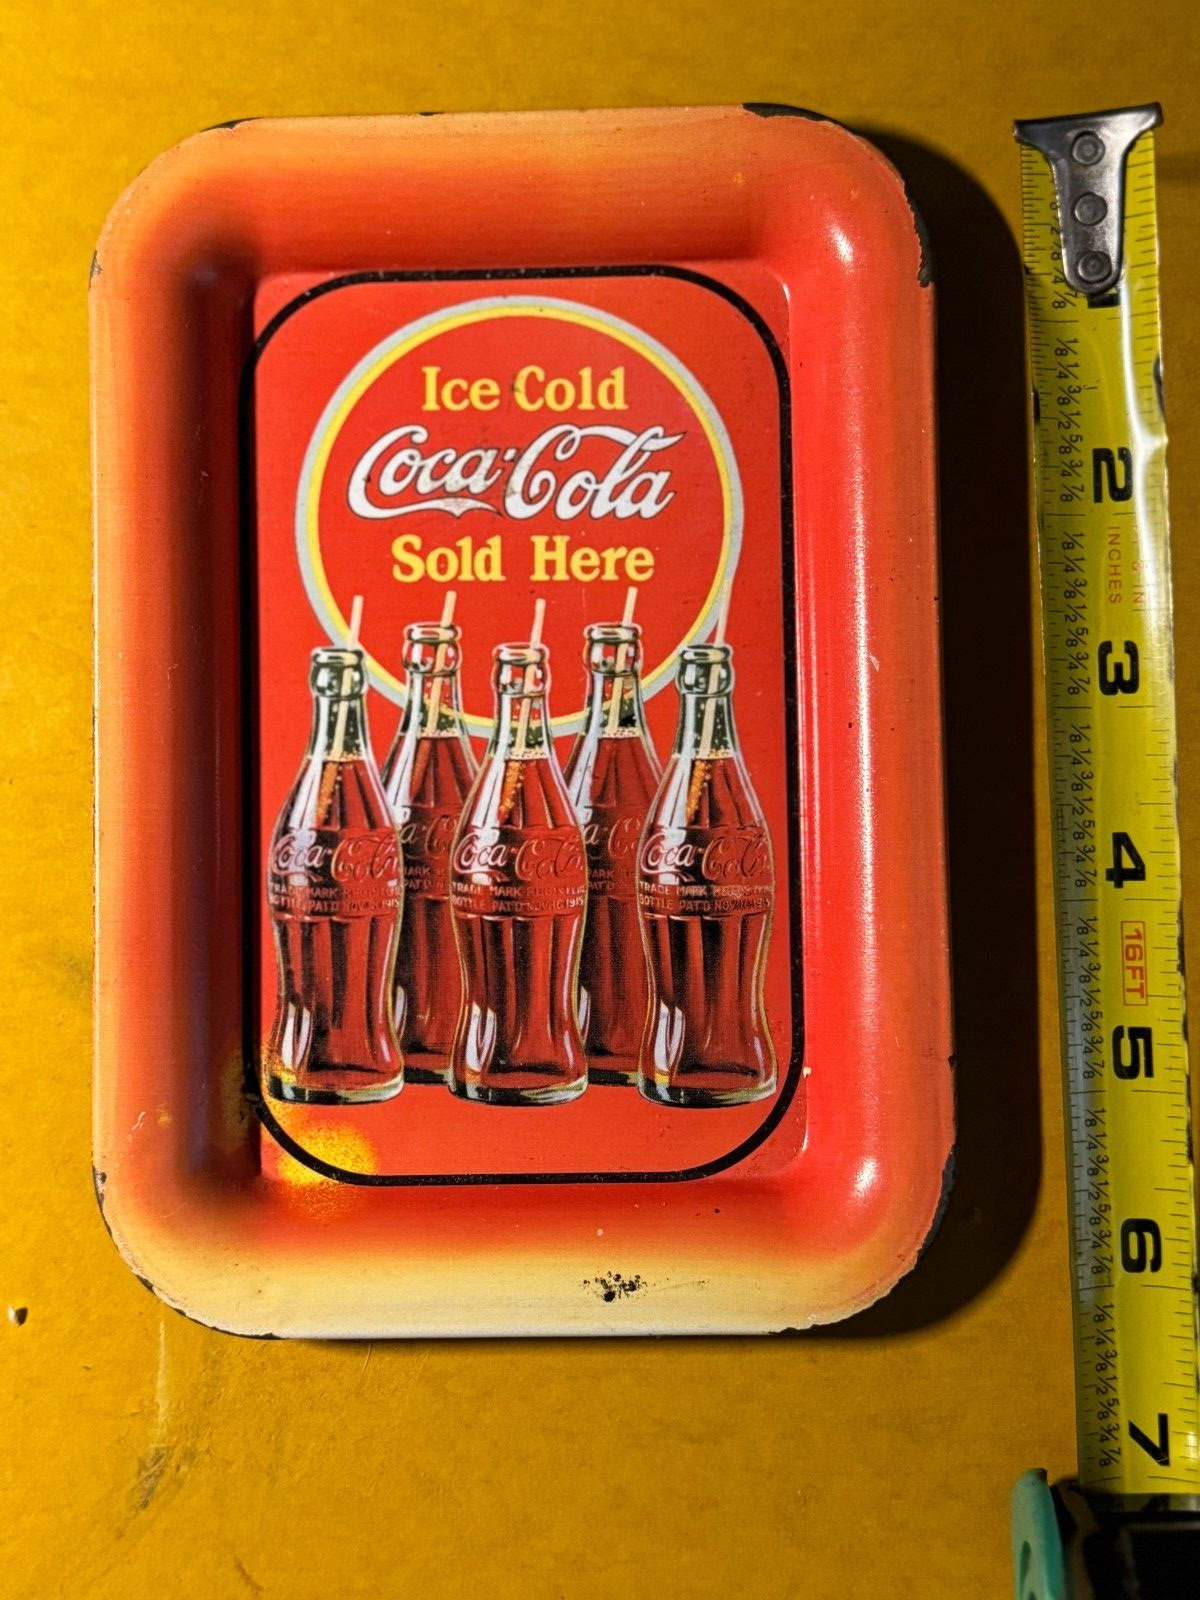 Coca-Cola Mini Red Tray 1997 Ice Cold Coca-Cola Sold Here-USED-VINTAGE